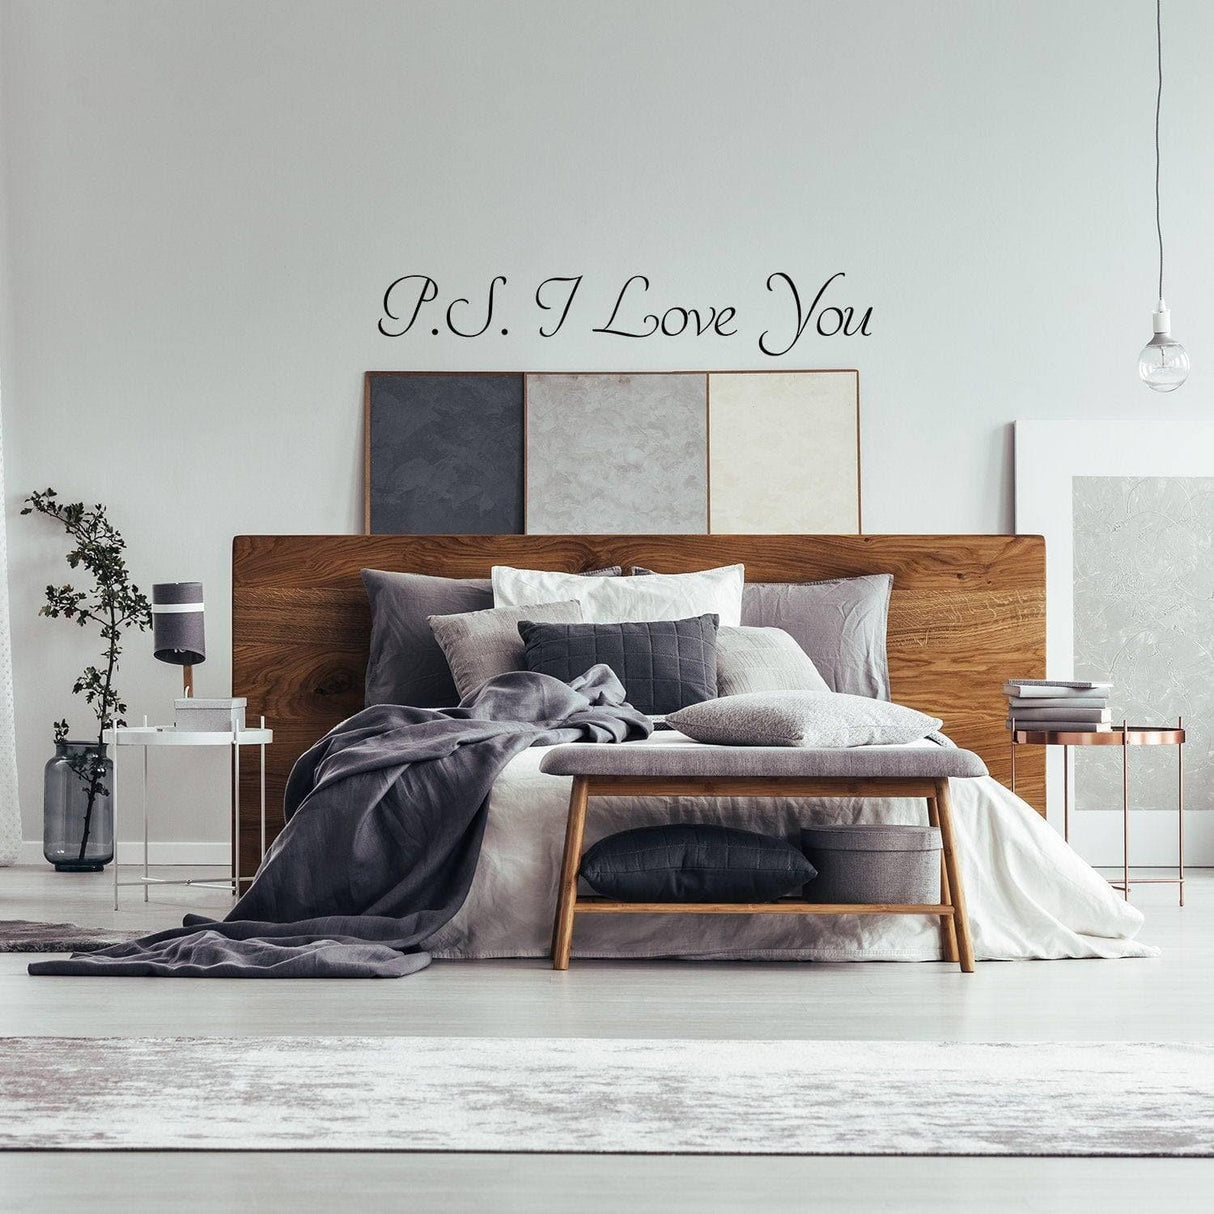 Romantic Bedroom Wall Decal Quote - – Vinyl Decords Sticker Love